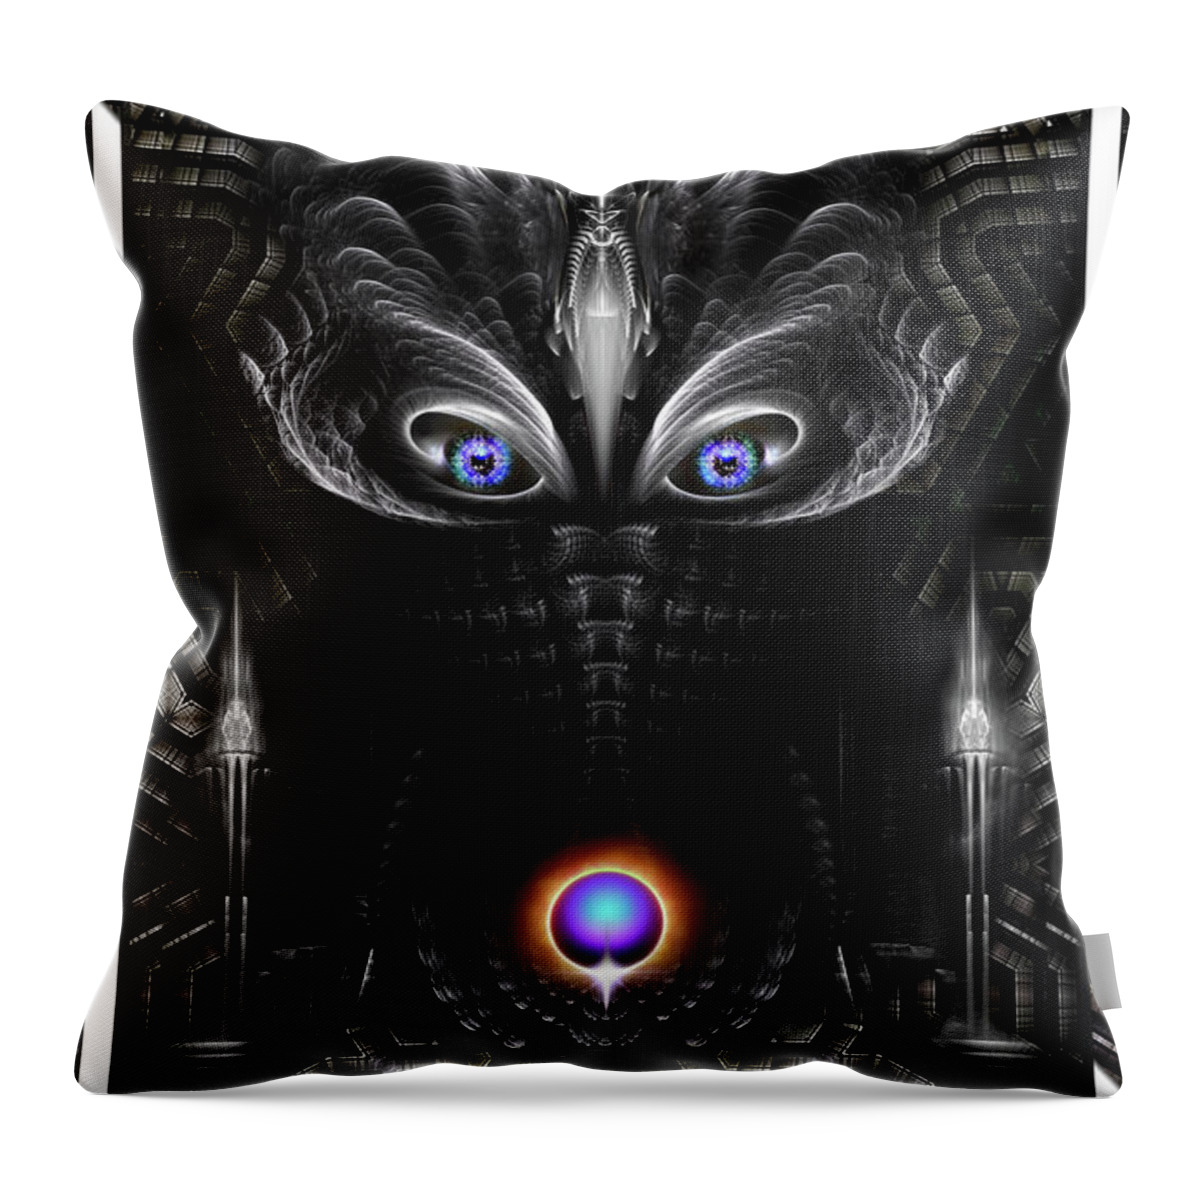 Warrior Throw Pillow featuring the digital art Dark Warrior Sculpture Fractal Art by Rolando Burbon